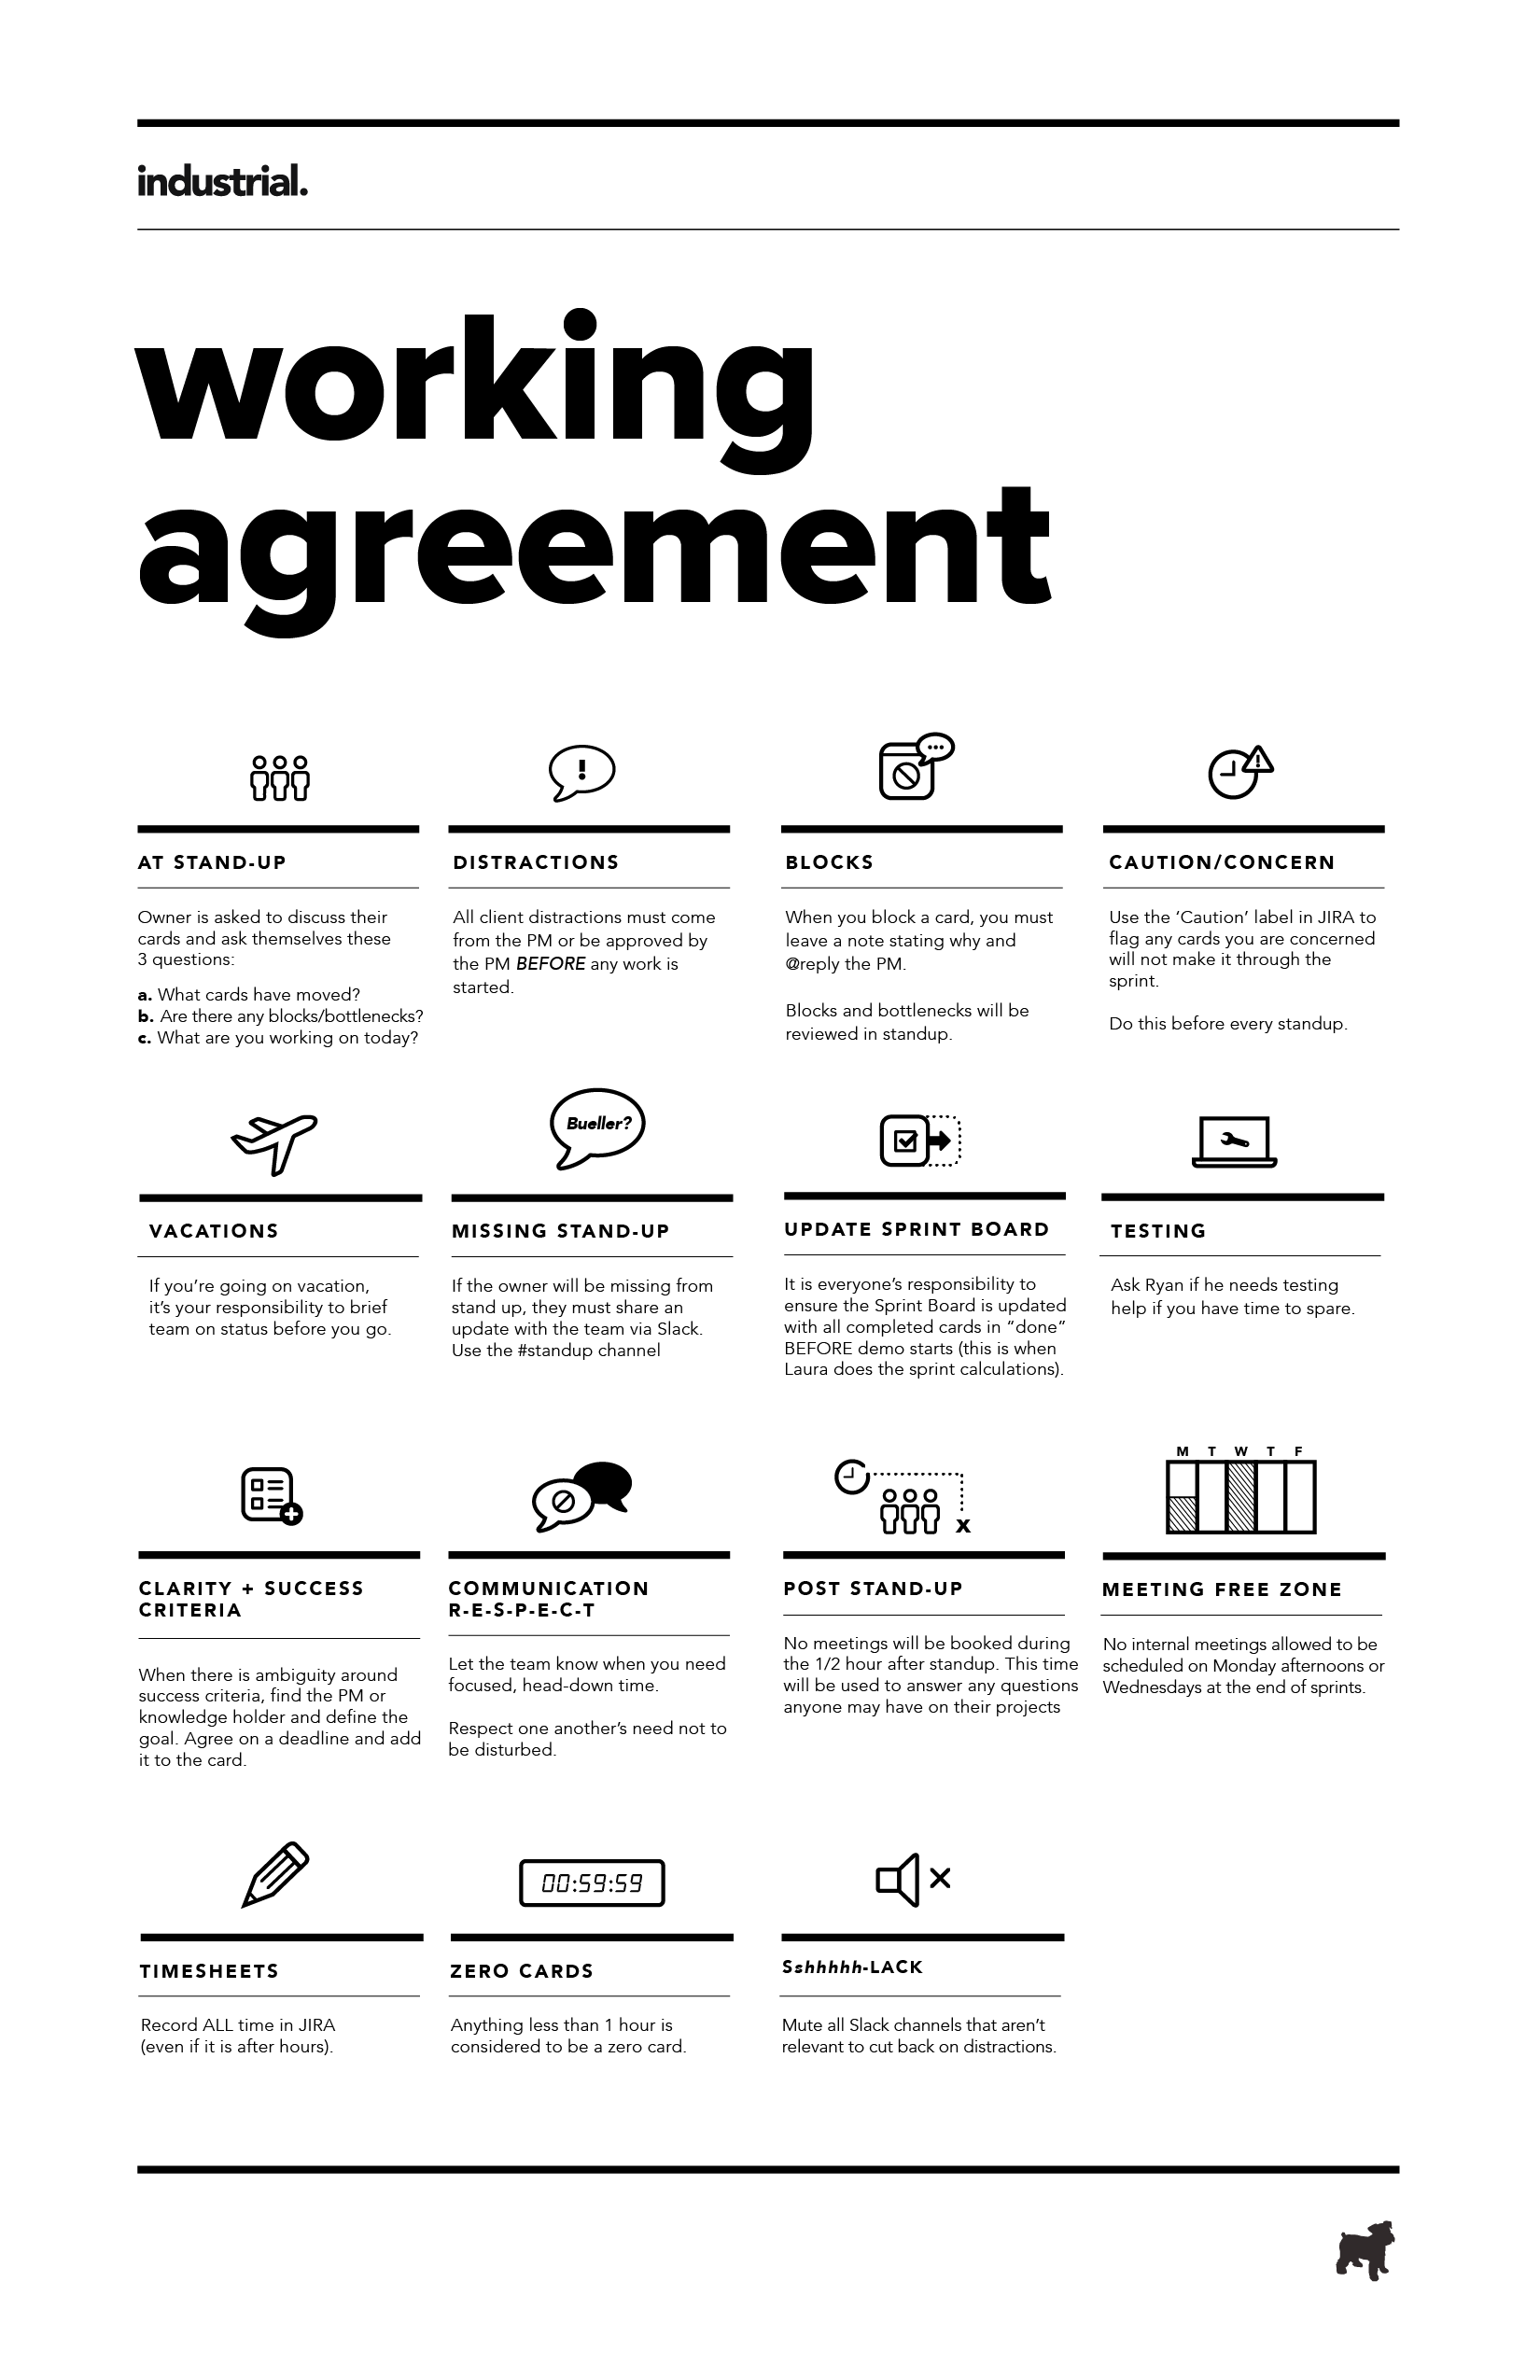 Team Working Agreement Google Sheets